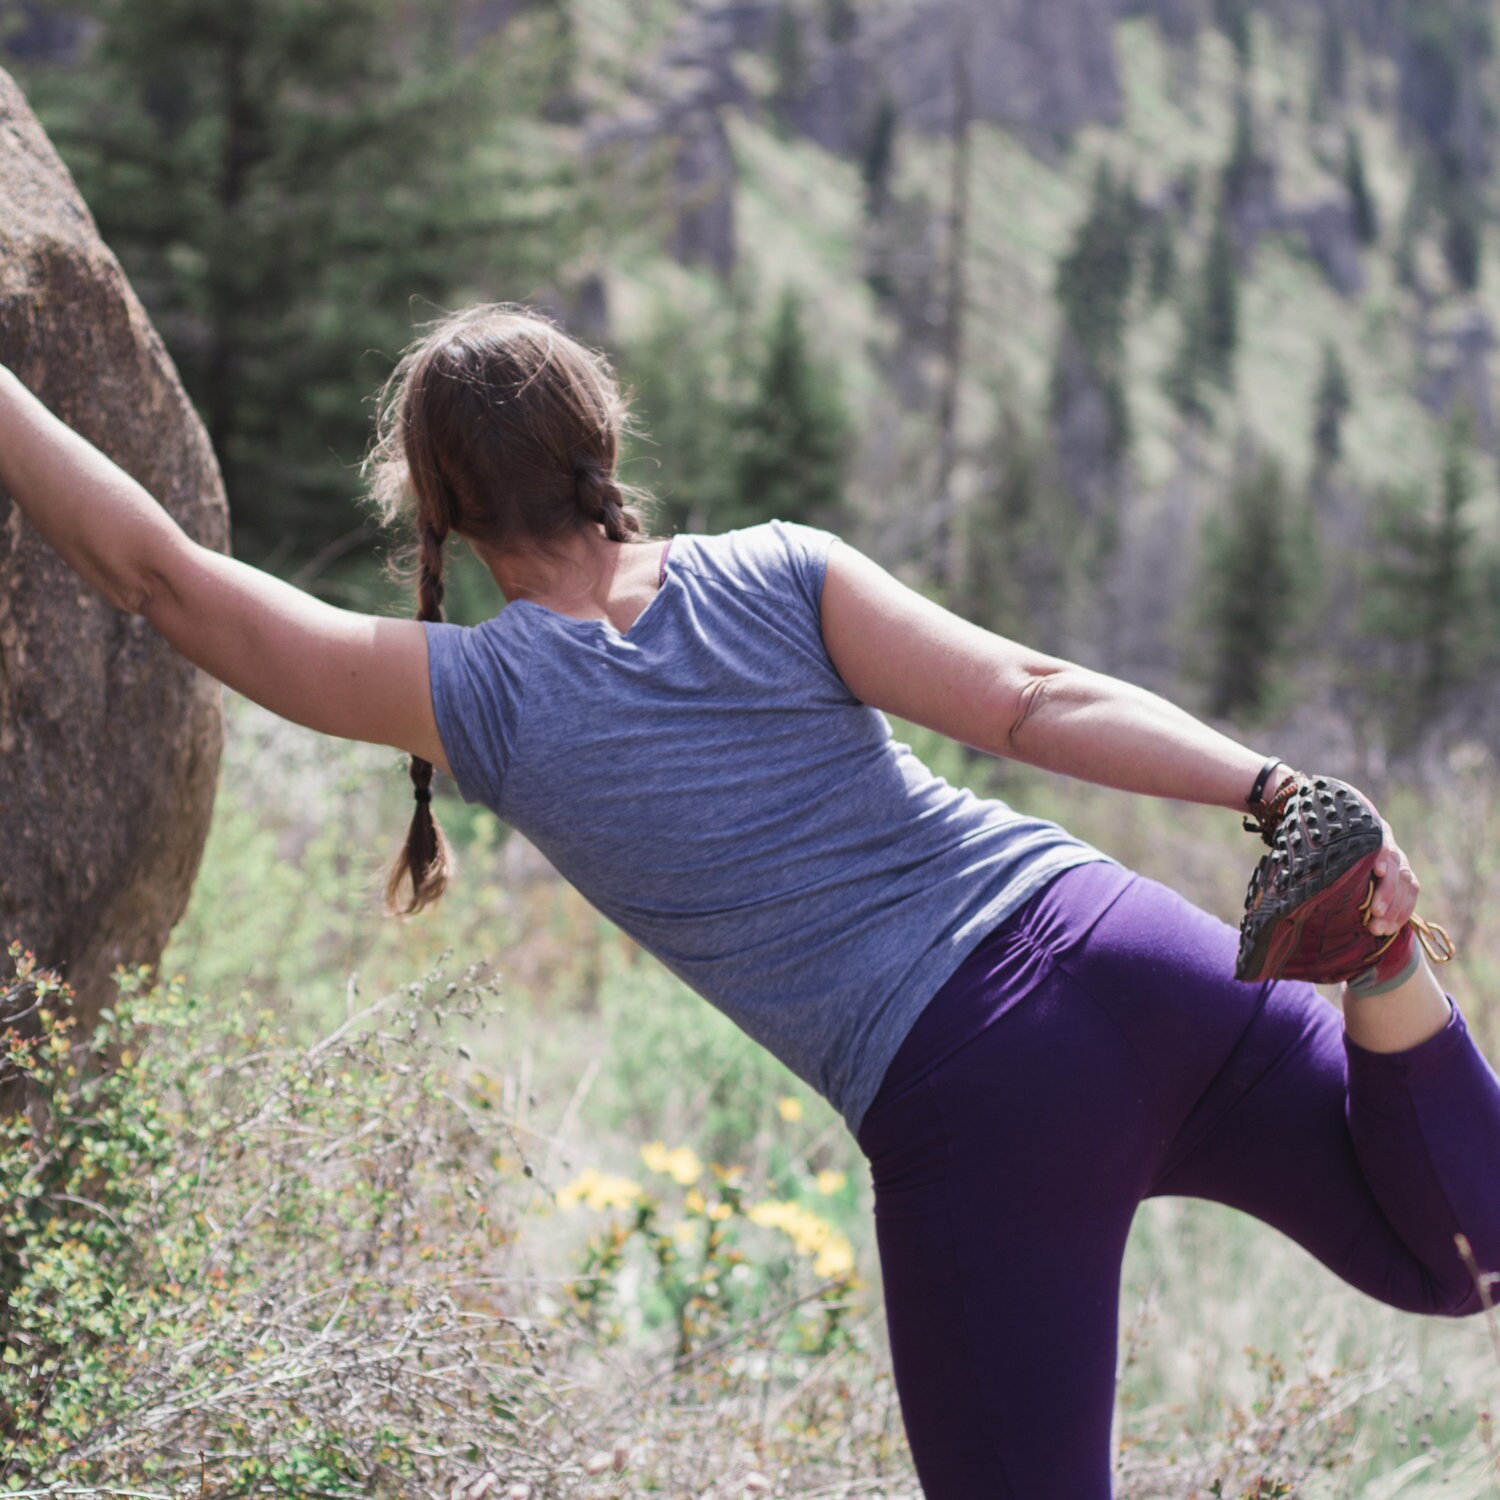 Hemp Inspire Yoga Pants Women's Organic Yoga Clothing Eco-friendly Leggings  -  Australia